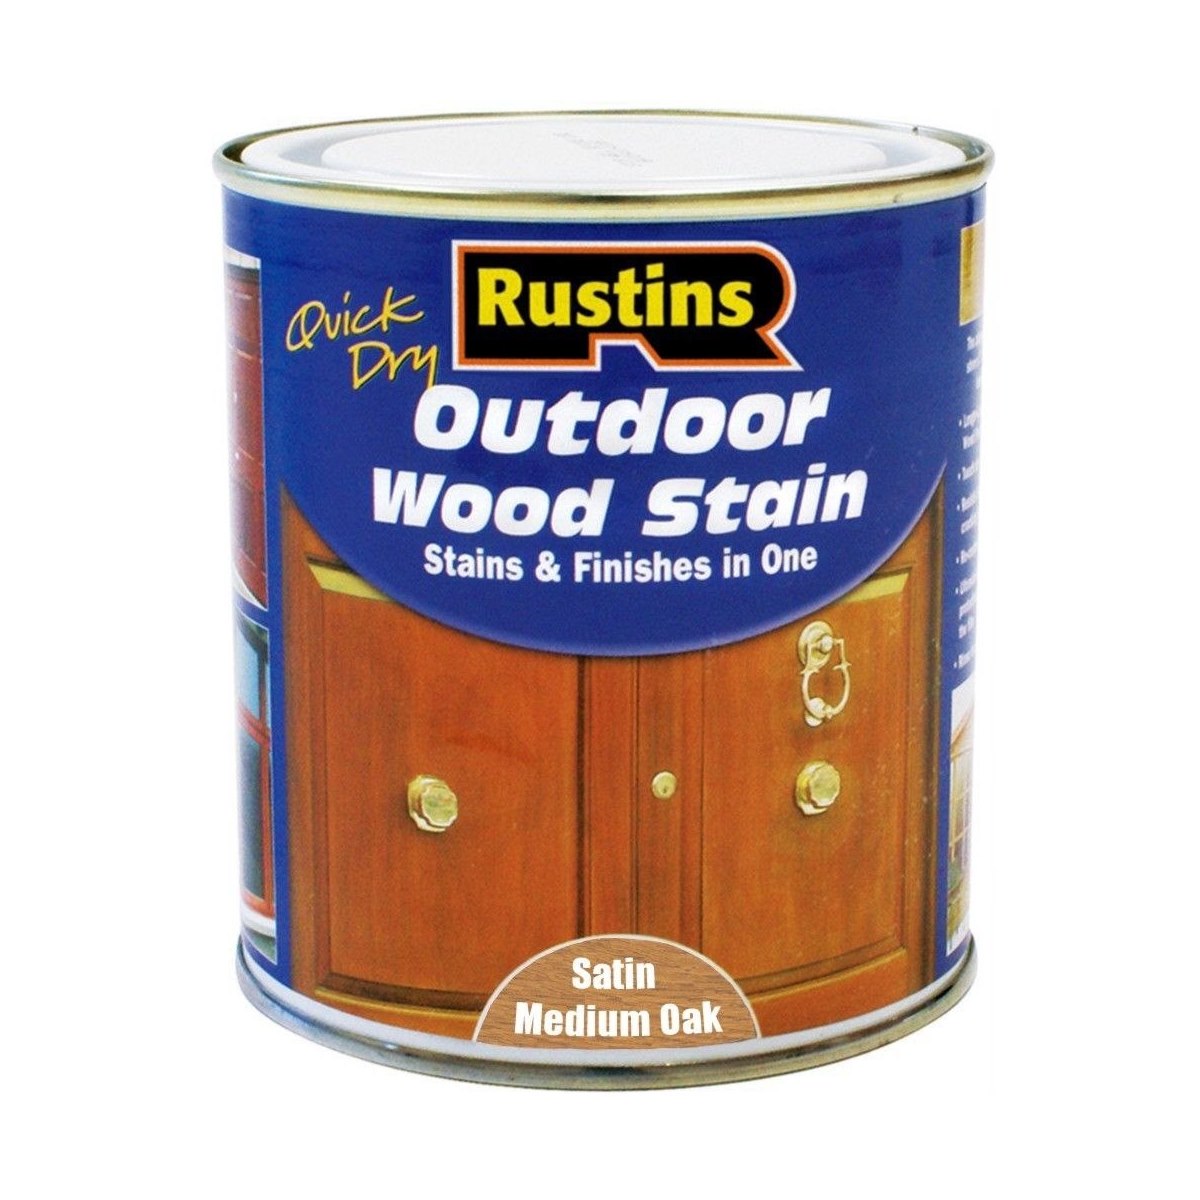 Rustins Quick Dry Outdoor Wood Stain Medium Oak 250ml